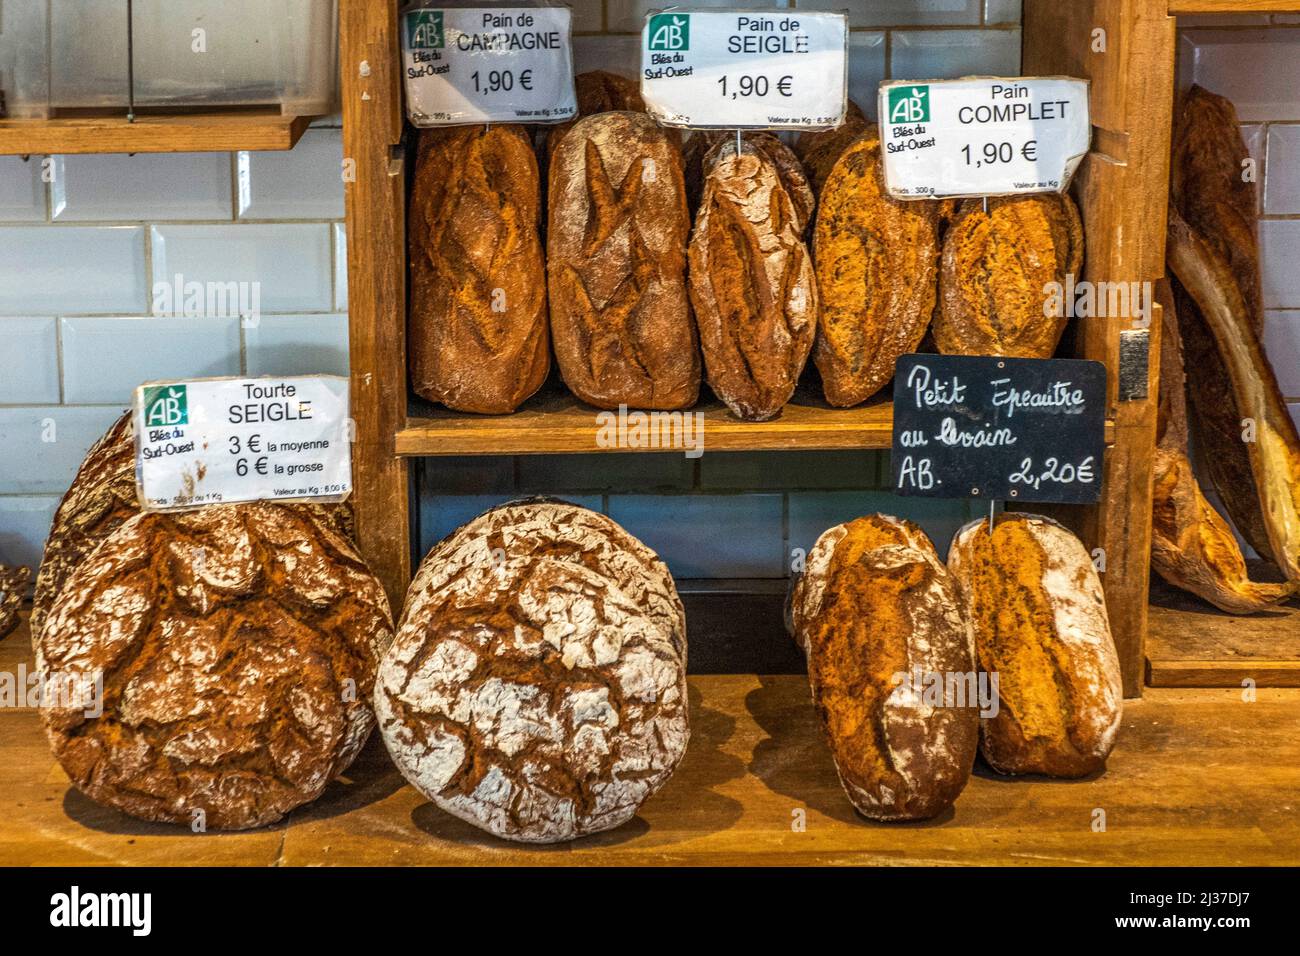 France-Nouvelle Aquitaine-Gironde - große Auswahl an Broten, in einer Bäckerei in Bordeaux. Stockfoto